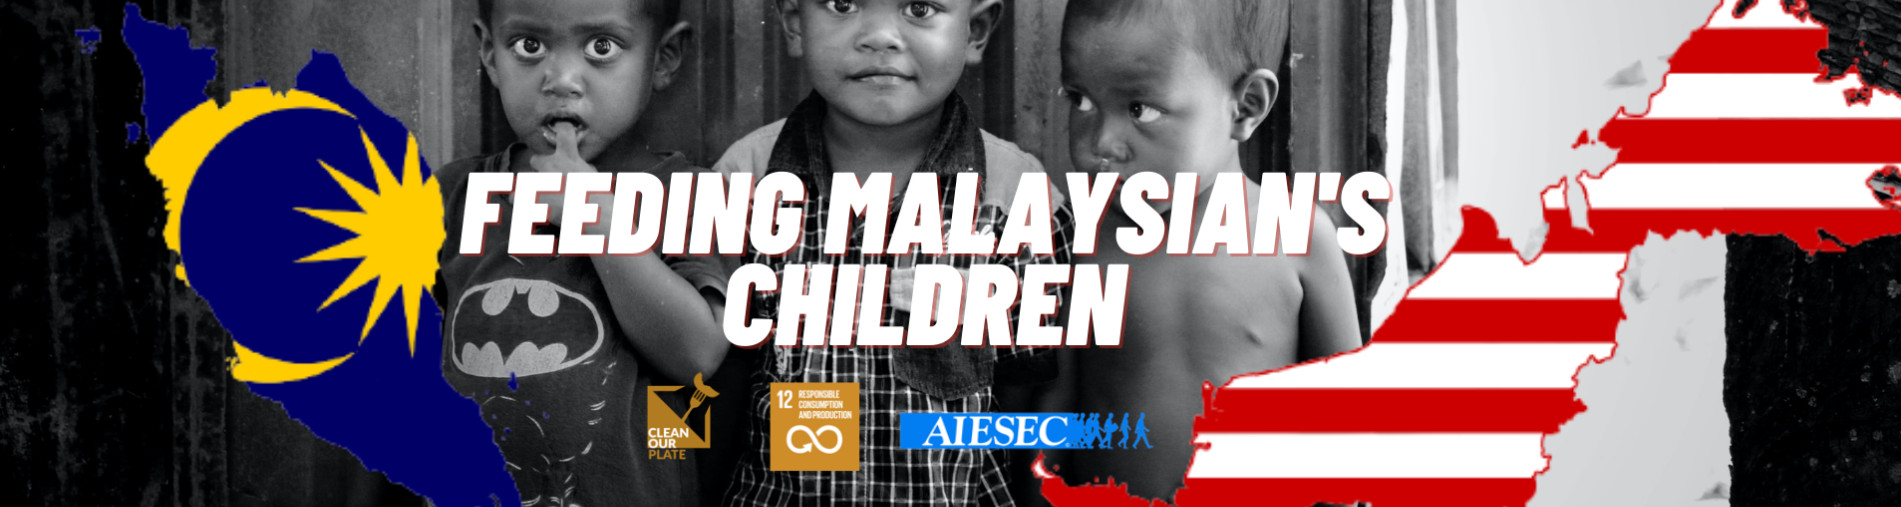 Feeding Malaysian's Children